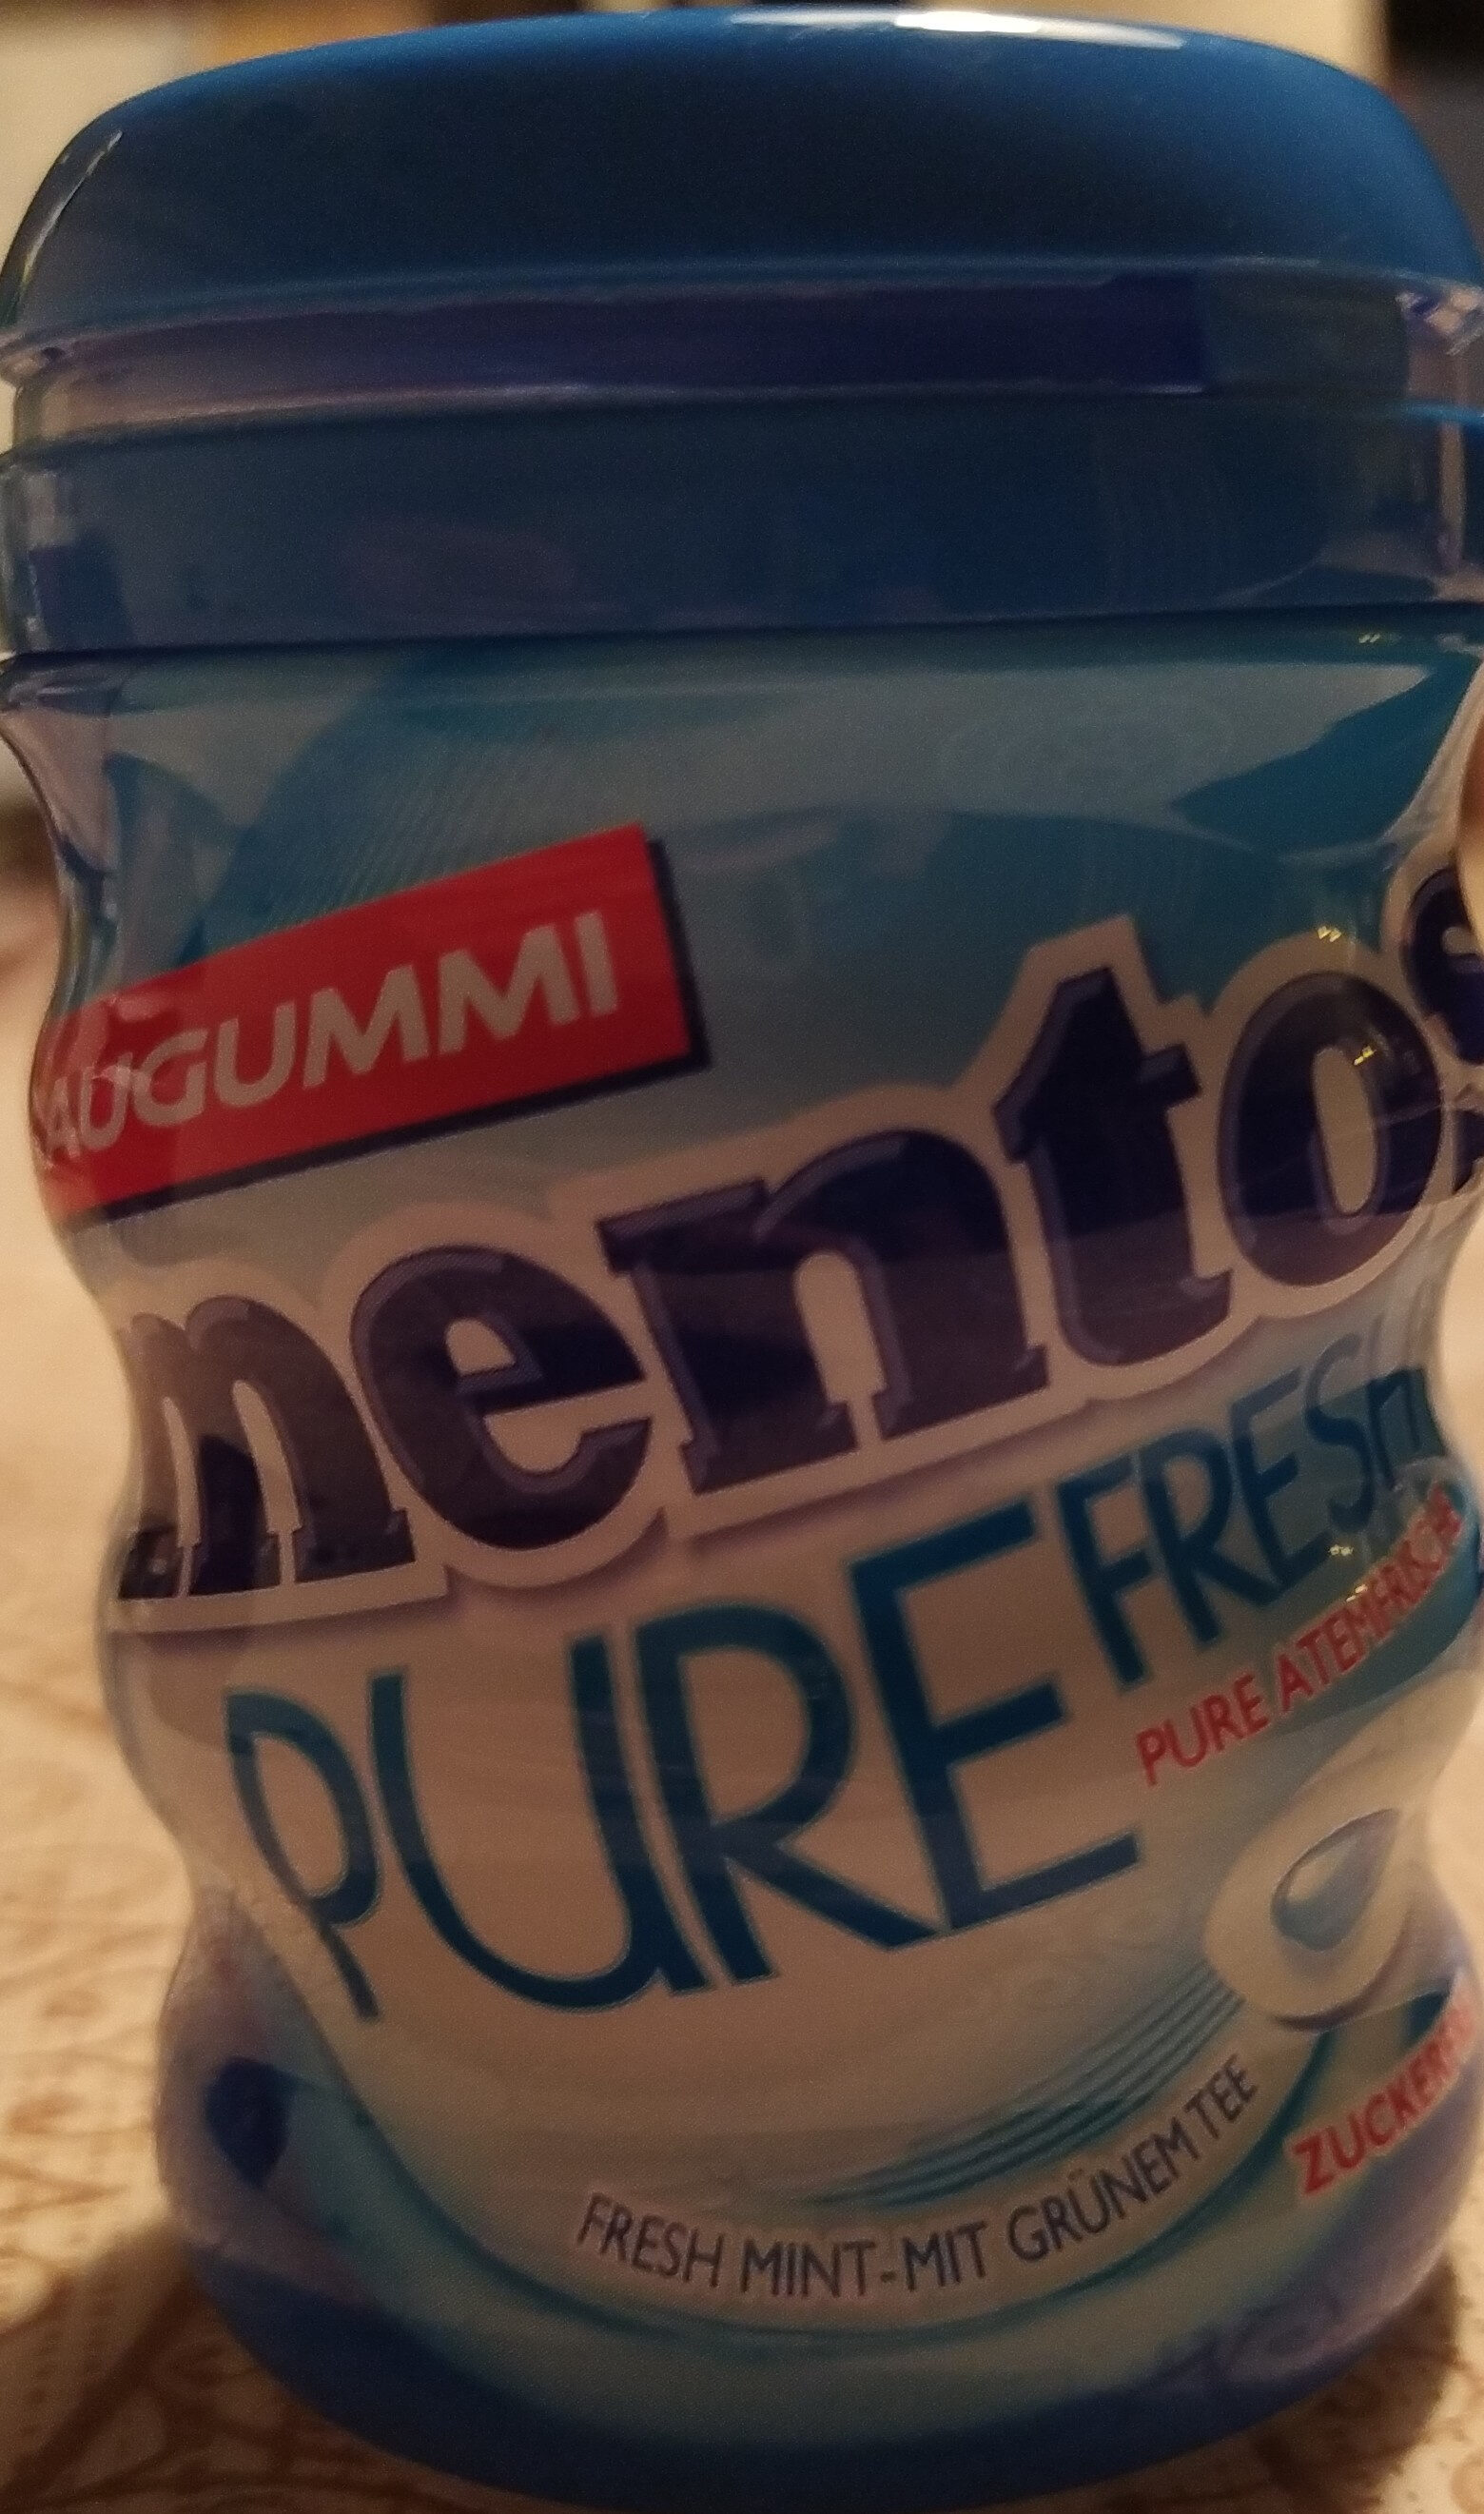 Mentos Pure Fresh, Fresh Mint mit grünem Tee - Produkt